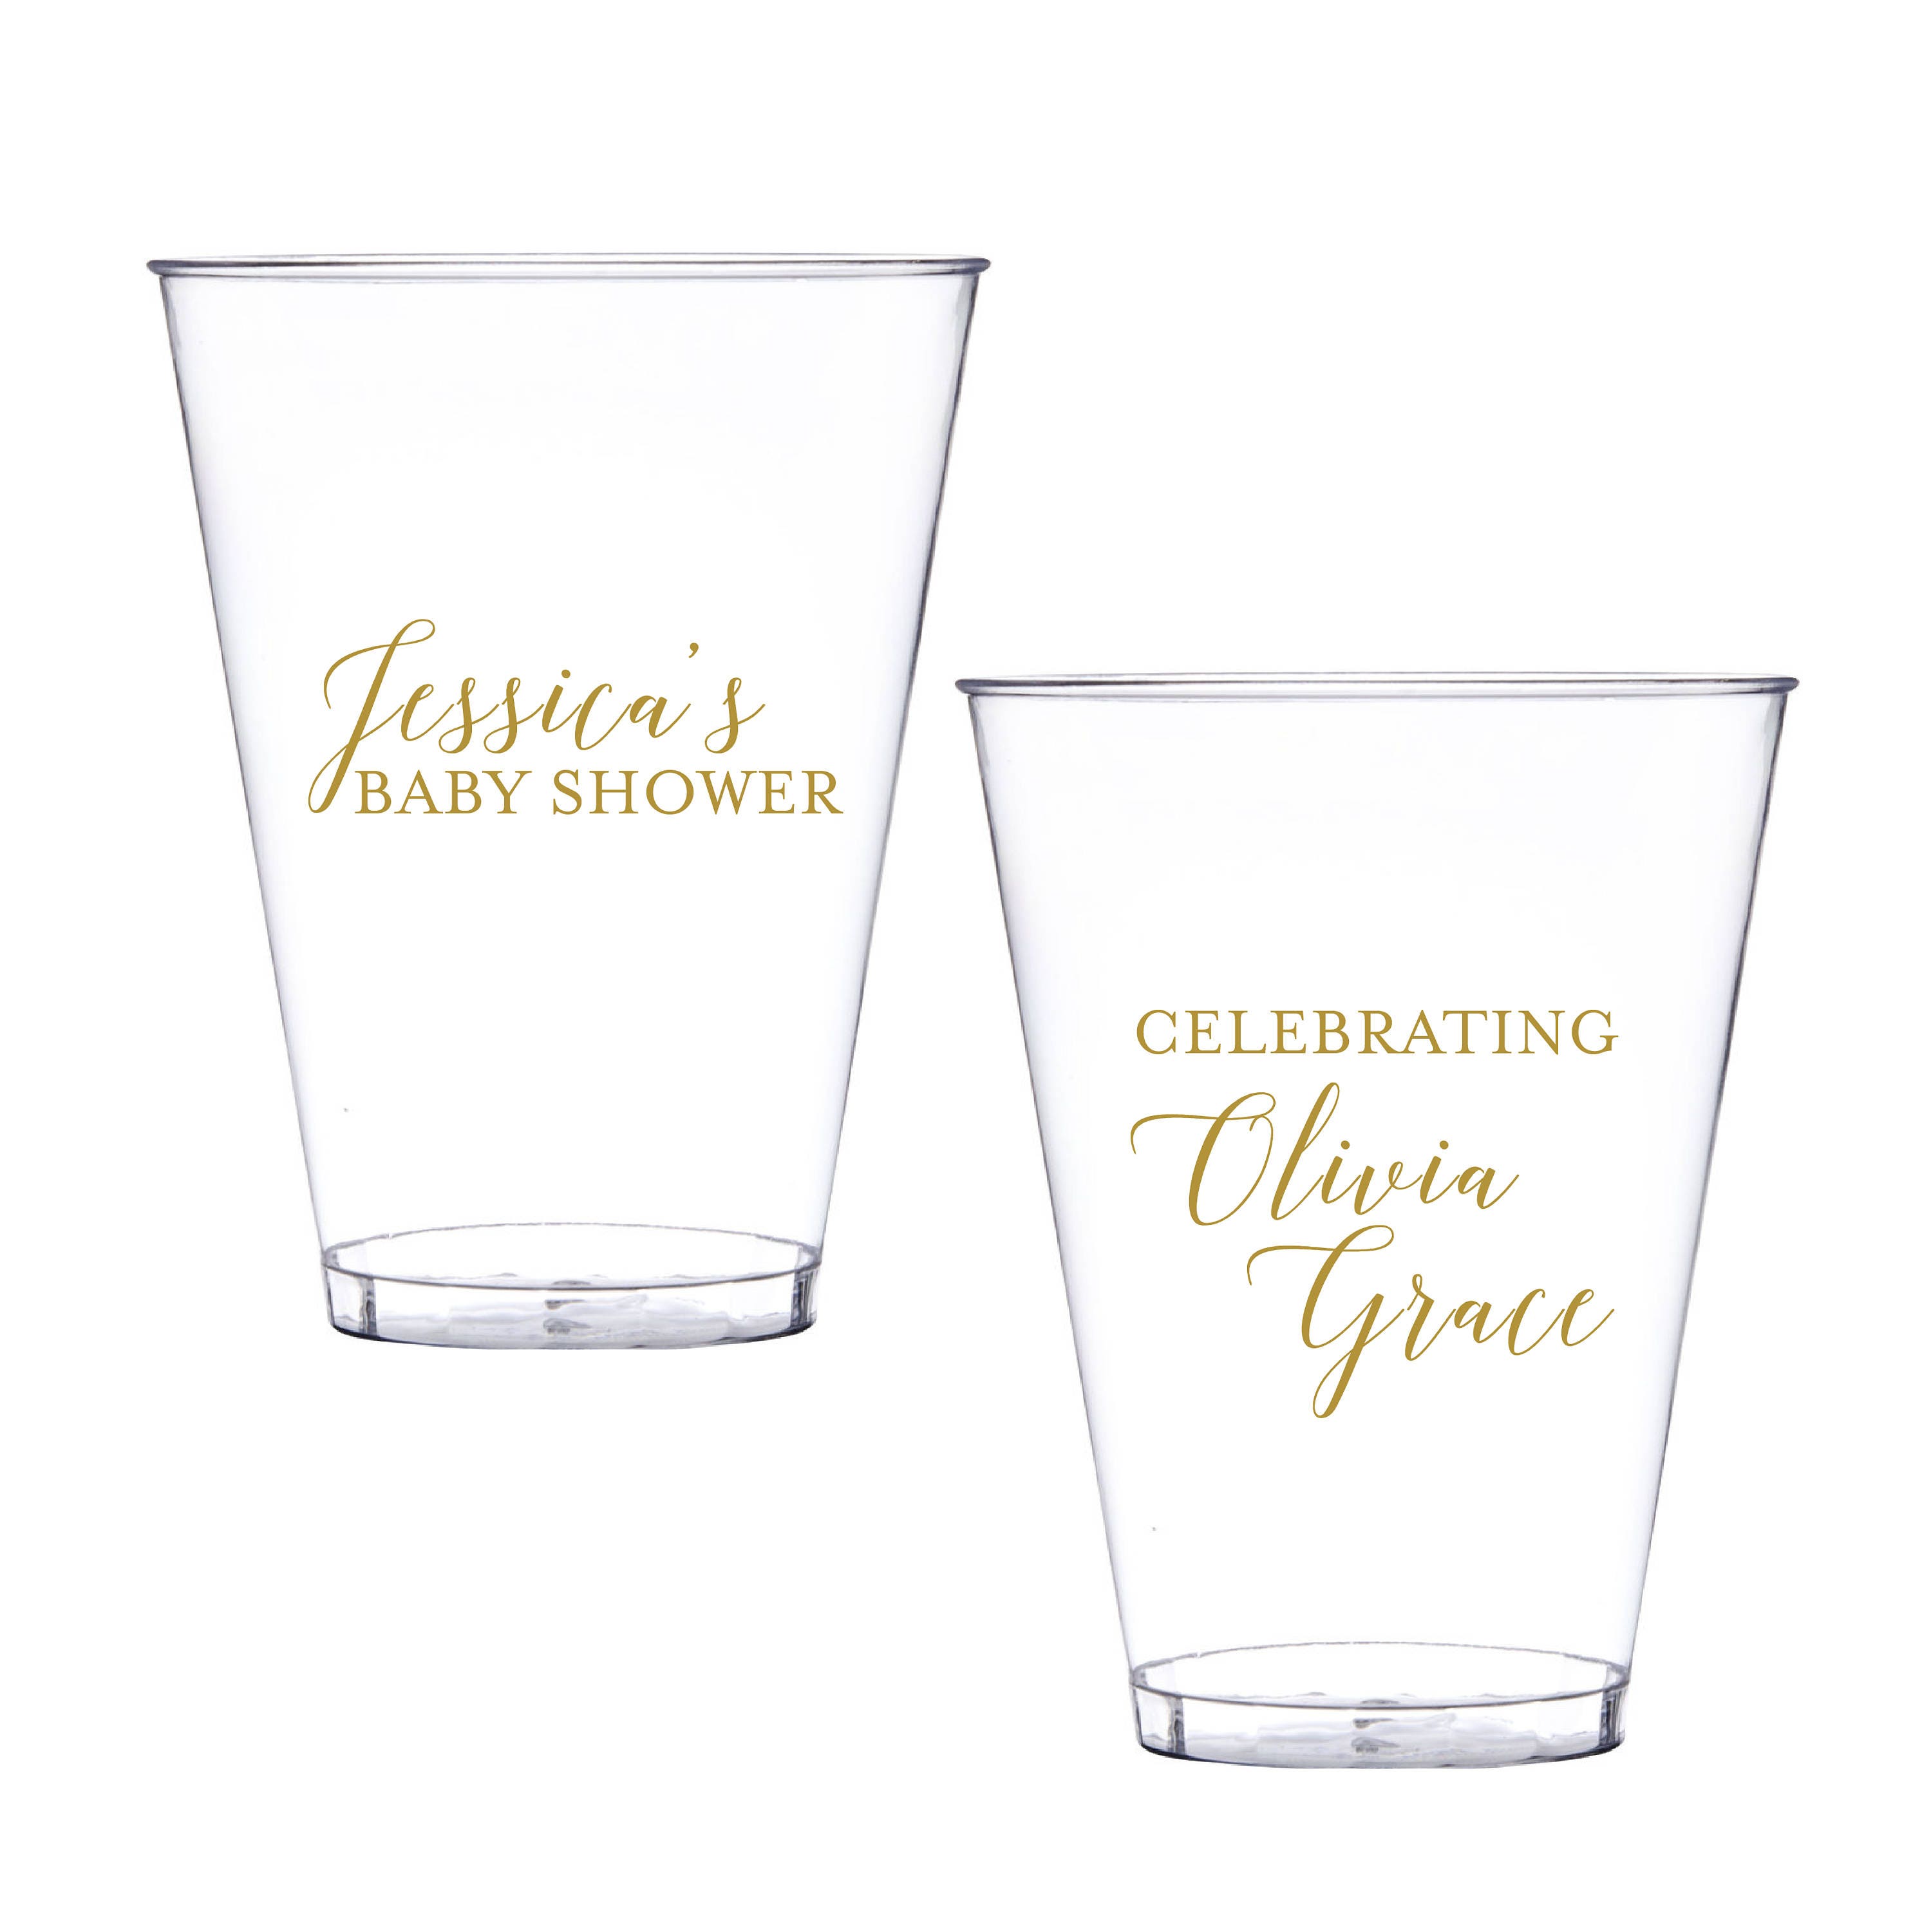 Plastic v glassware Open Bar Cocktail/reception, Weddings, Wedding  Reception, Wedding Forums